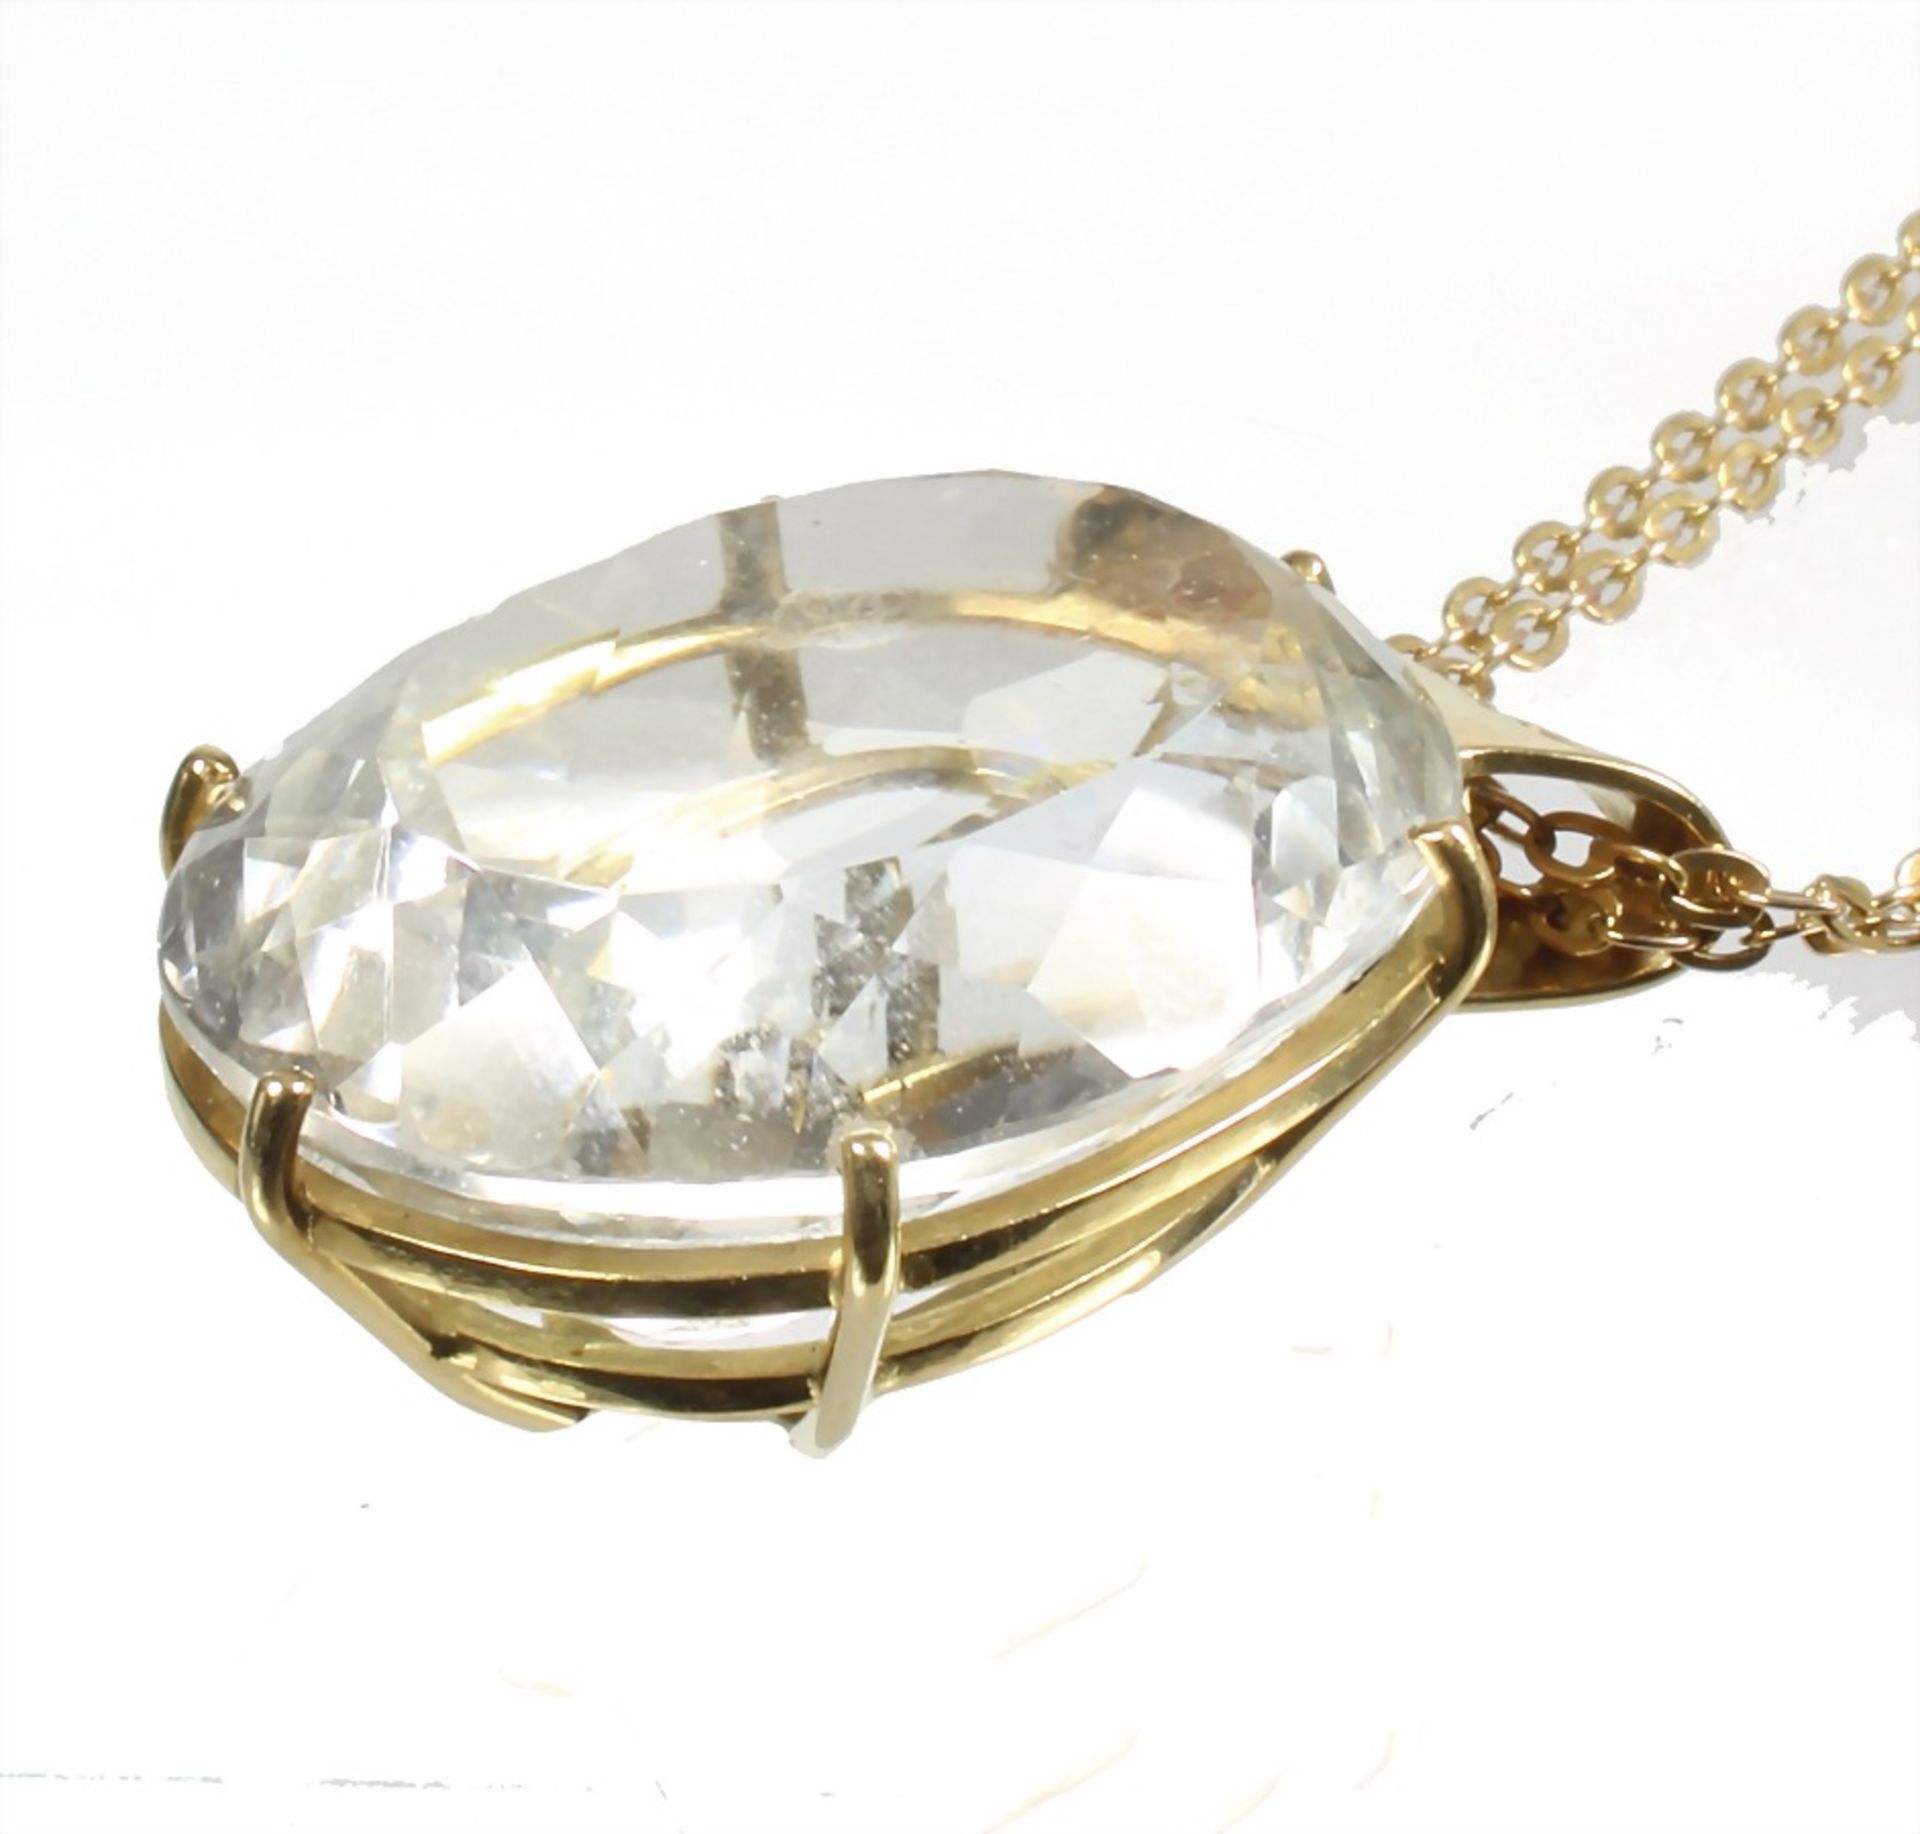 pendant, yelow gold 750/000, rock crystal (quartz) c. 33 x 25.5 mm, height = 46.0 mm, chain (twice), - Bild 2 aus 3